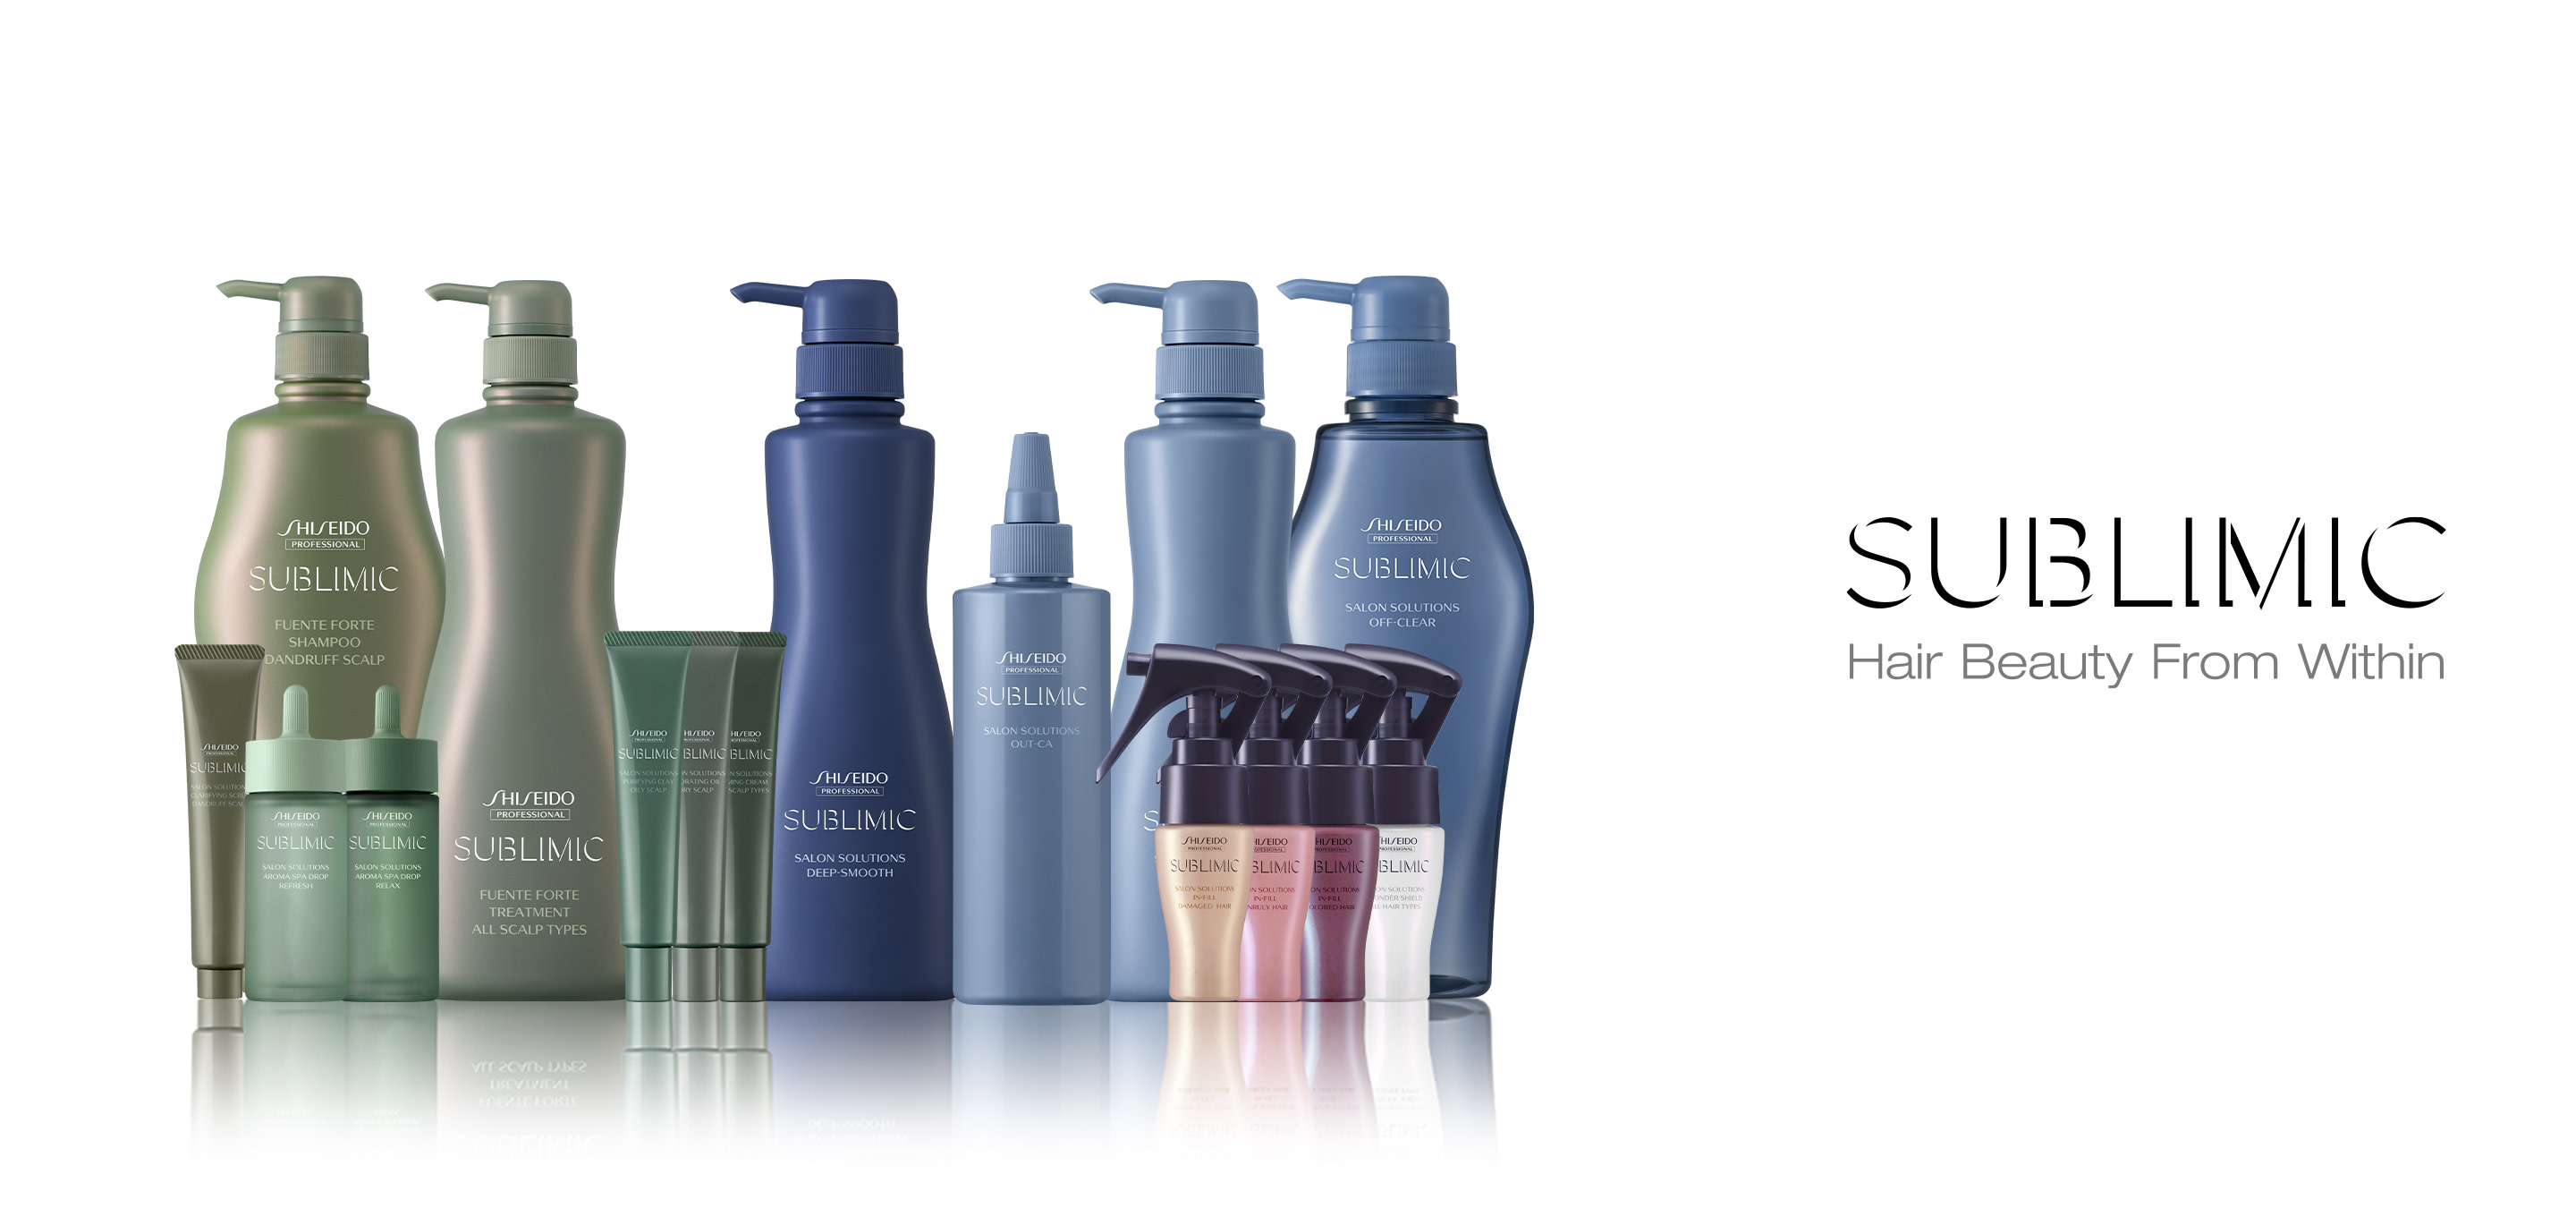 Shiseido Professional's Sublimic Products